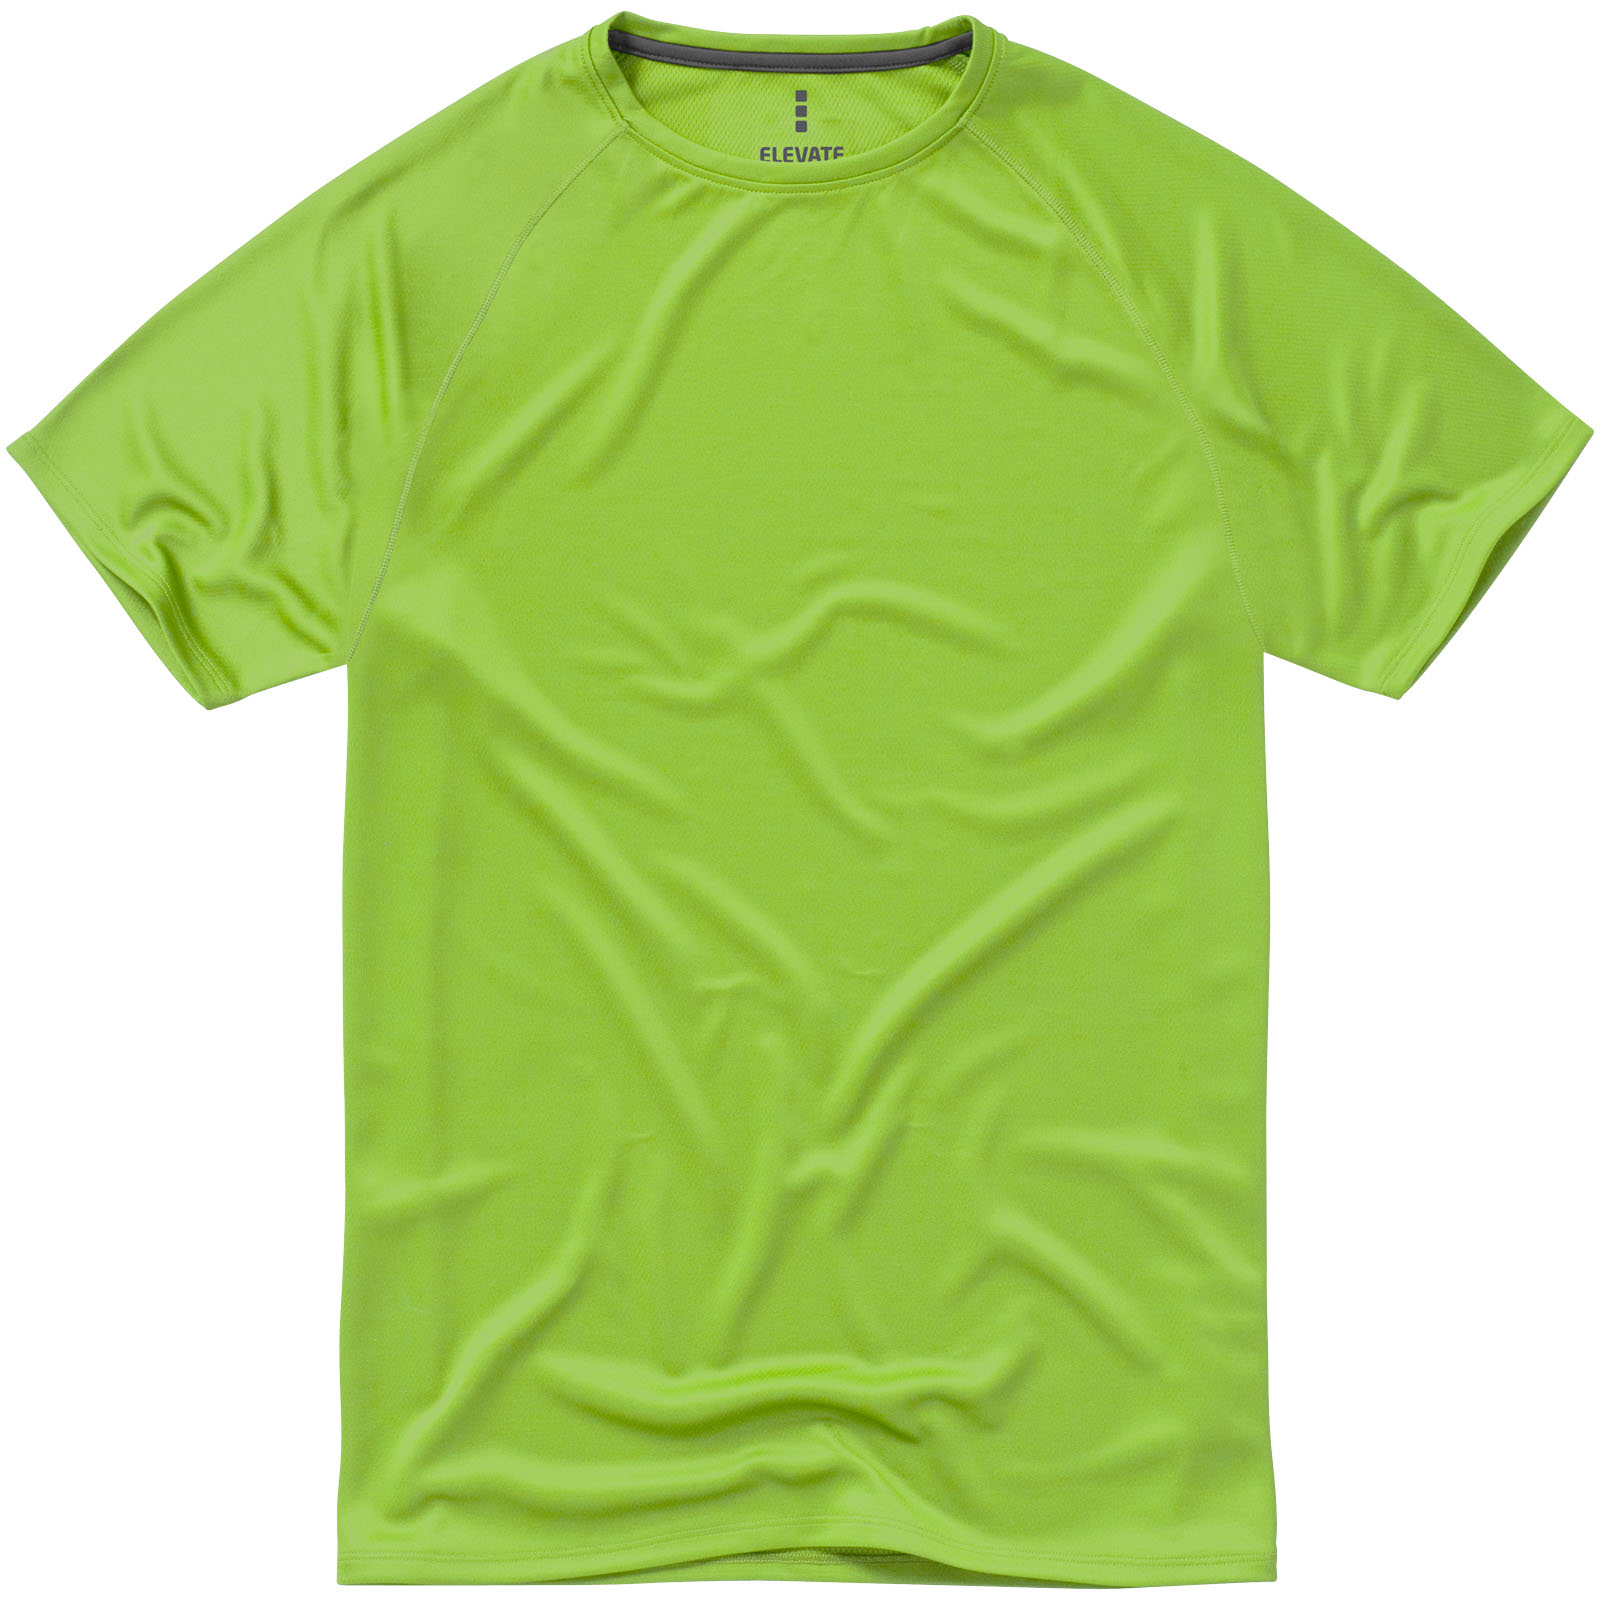 Валдберис футболка мужская. Футболка Striker зеленое яблоко. Салатовая рубашка. Футболка детская. Салатовая футболка.